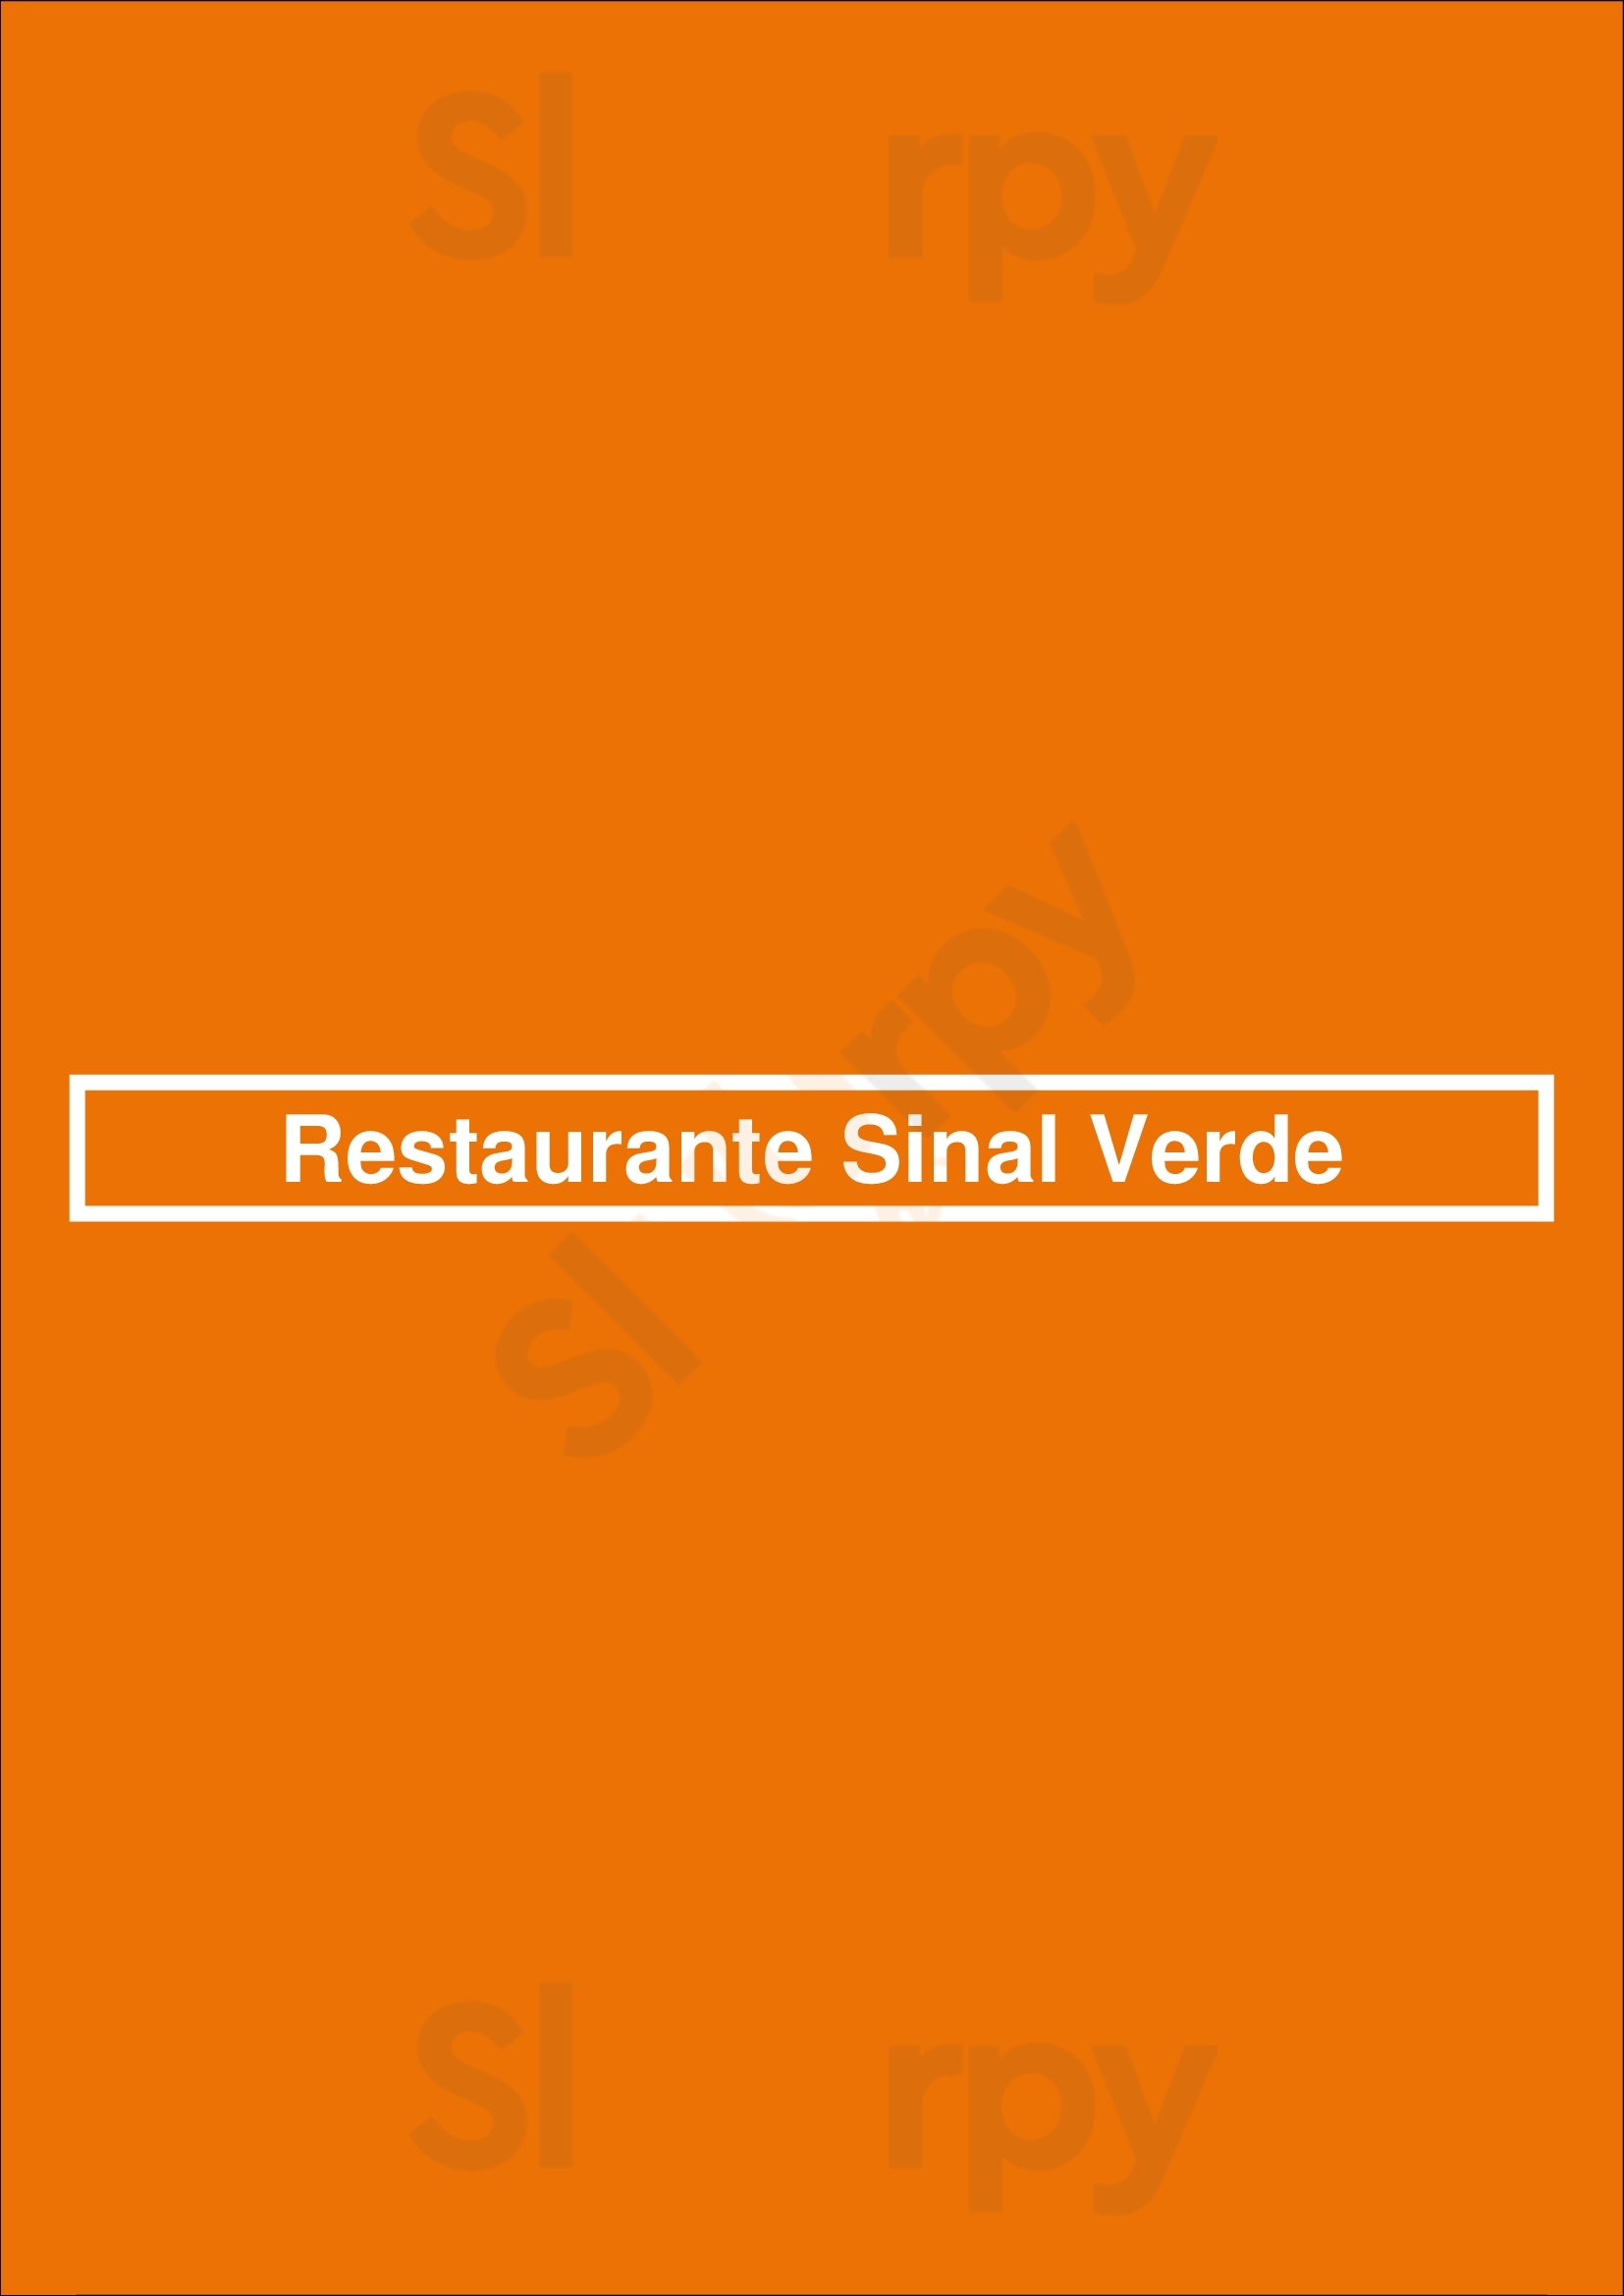 Restaurante Sinal Verde Lisboa Menu - 1